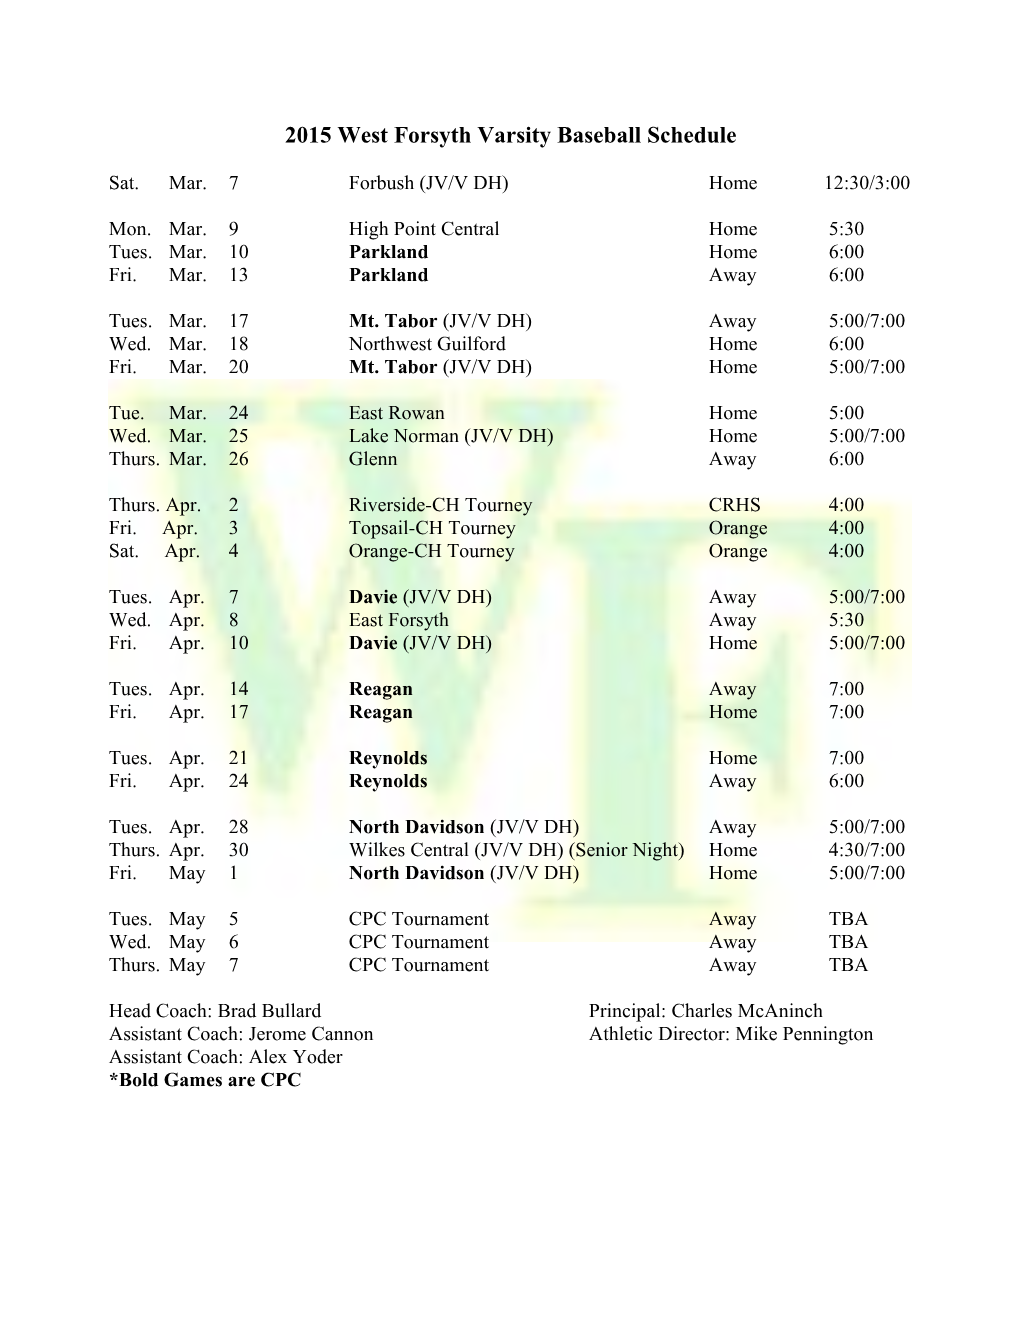 2014 West Forsyth Varsity Baseball Schedule